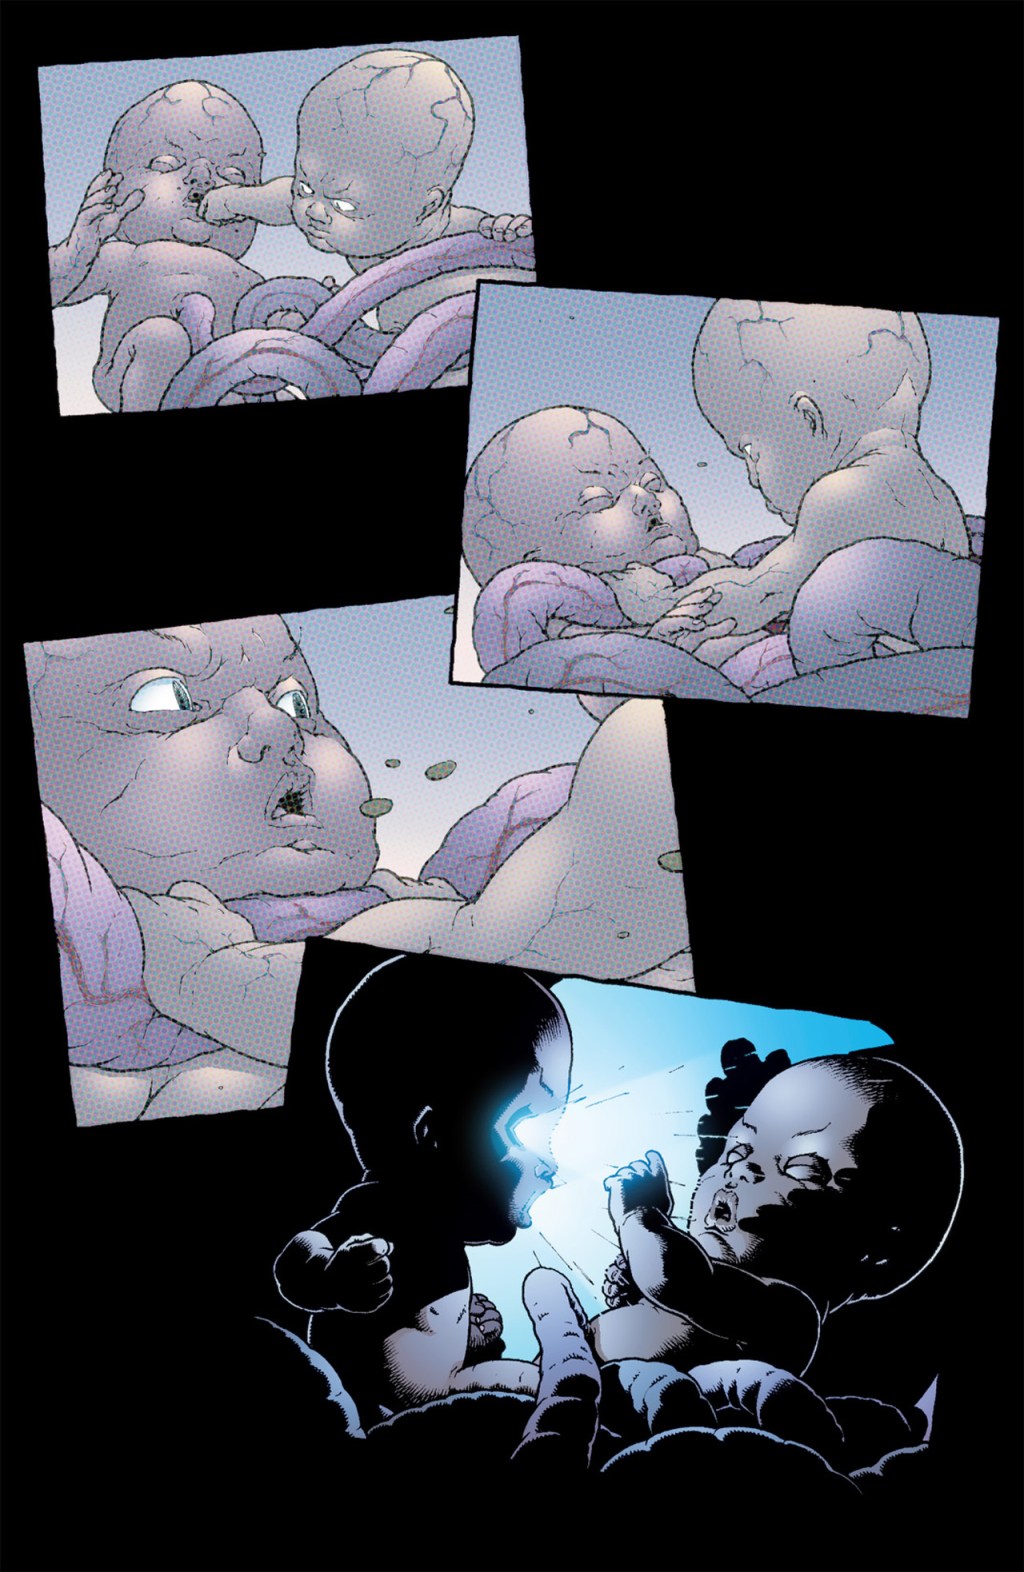 Charles Xavier kills Cassandra Nova in utero out of self-defense in New X-Men Vol. 1 #121 "Silence: Psychic Rescue In Progress" (2002), Marvel Comics. Words by Grant Morrison, art by Frank Quitely, Hi-Fi Design, and Richard Starkings.